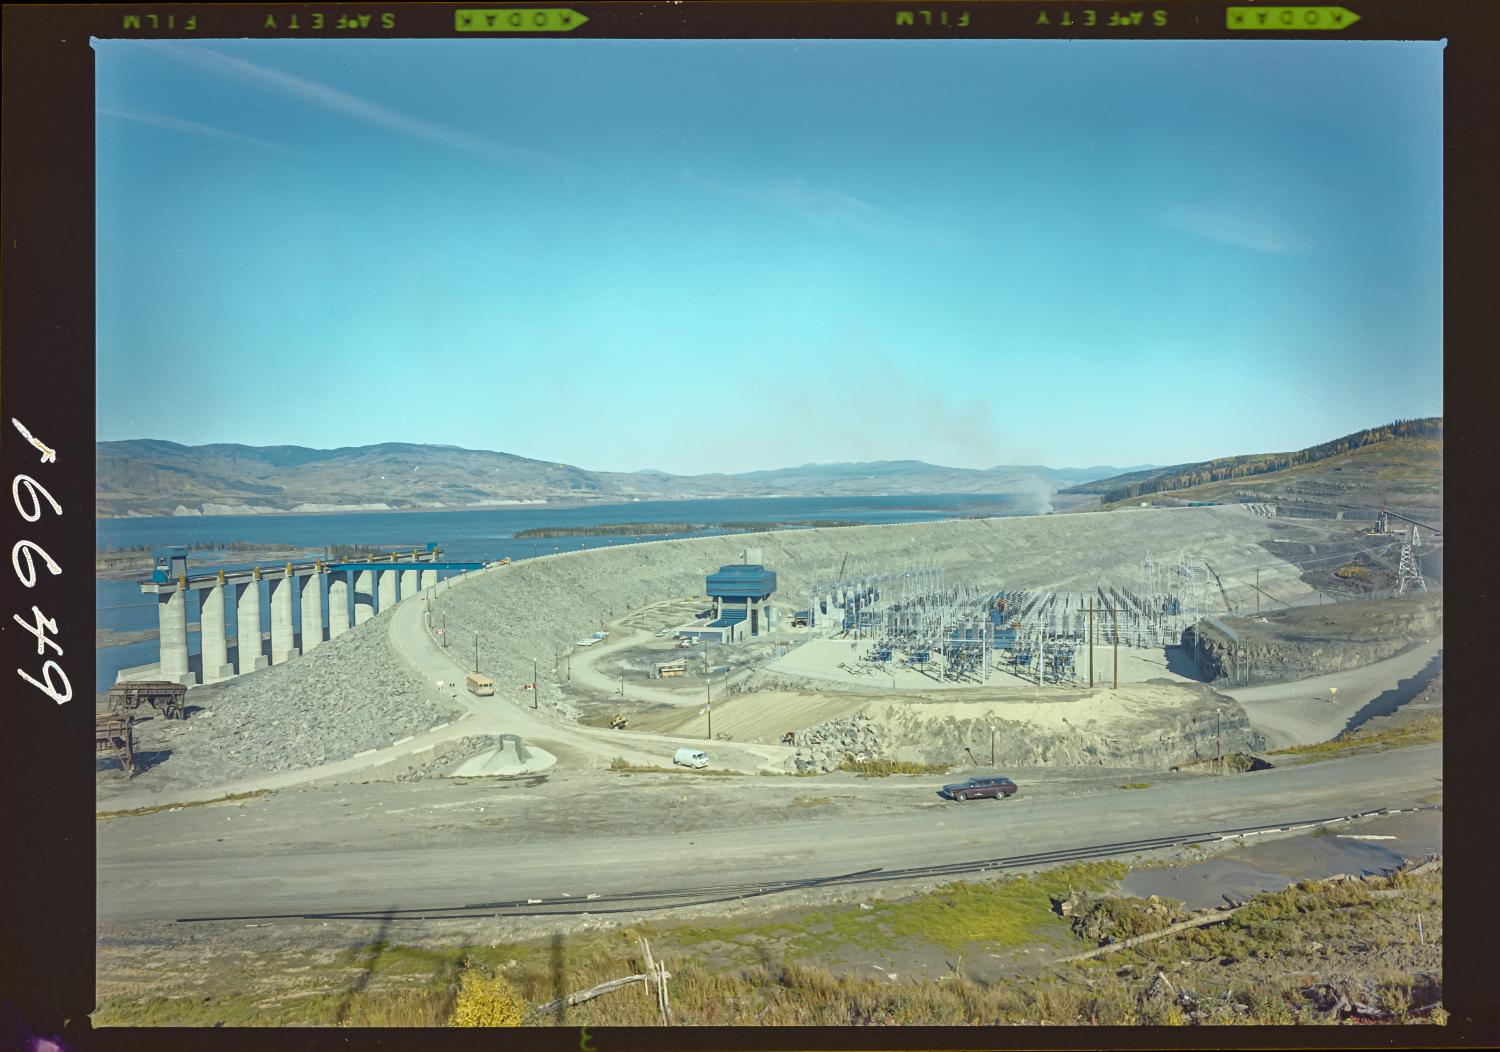 W.A.C. Bennett dam from afar in 1969.